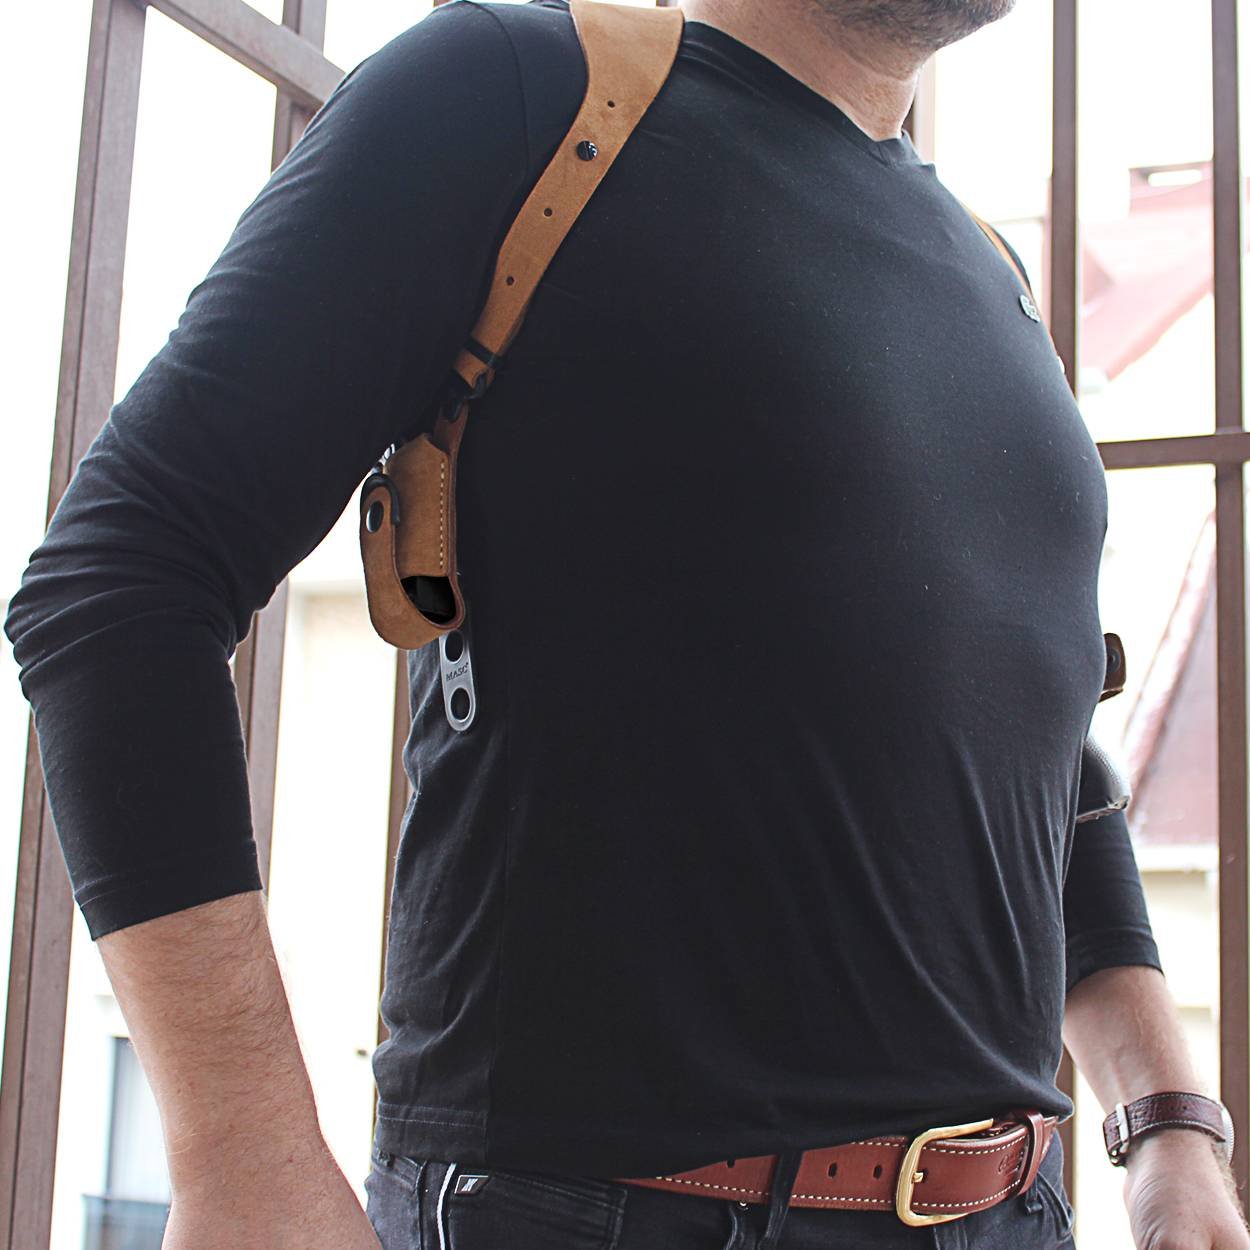 Suede Leather Single Magazine Carrier For Shoulder System